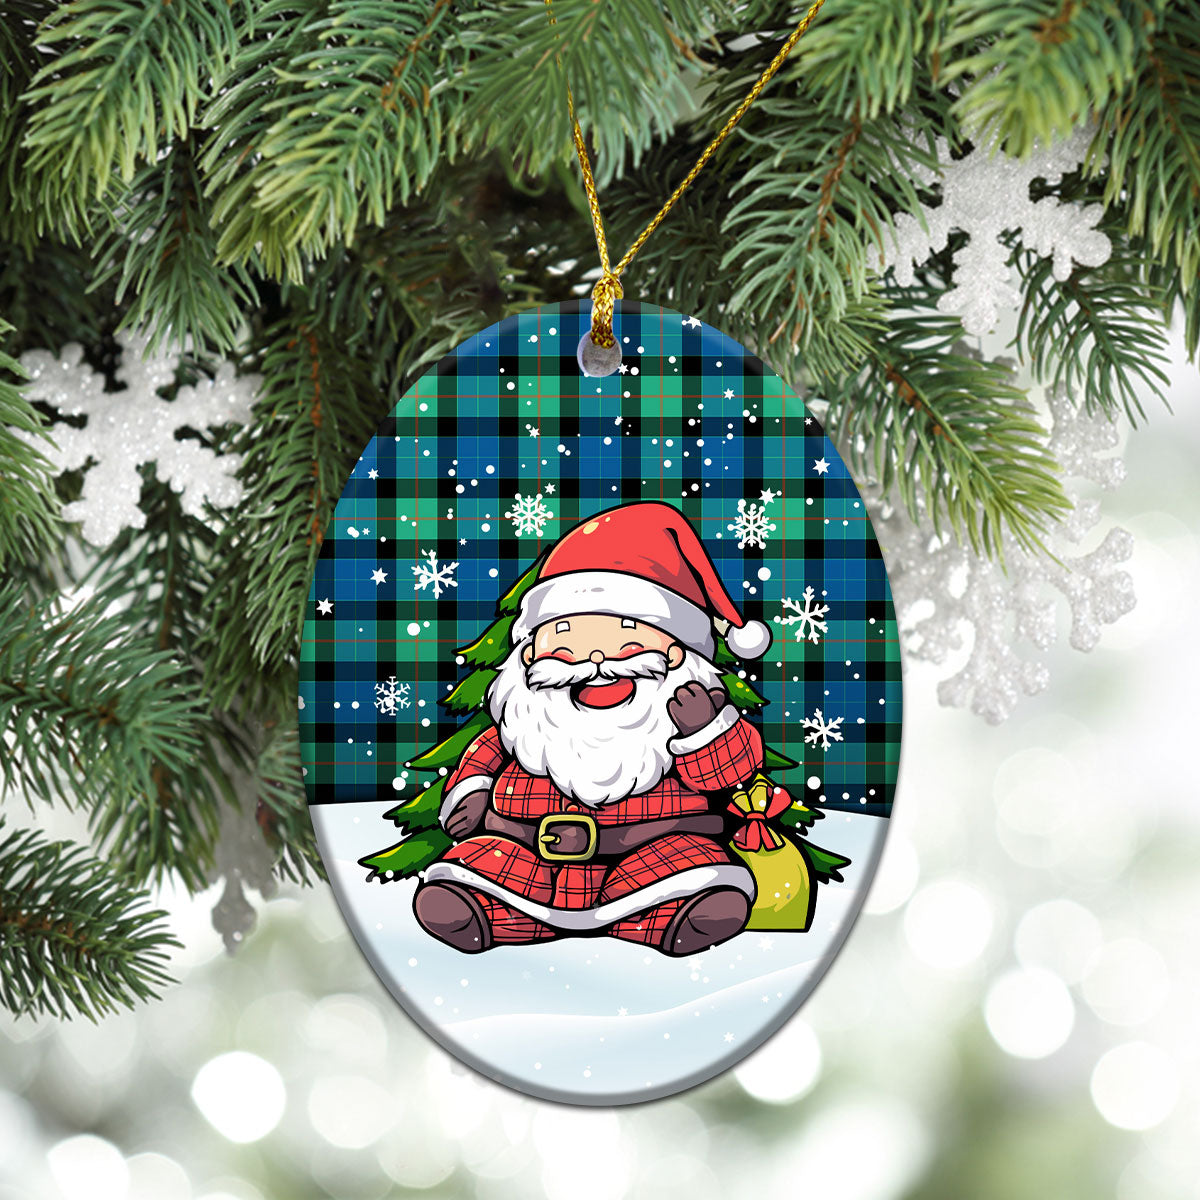 Gunn Ancient Tartan Christmas Ceramic Ornament - Scottish Santa Style